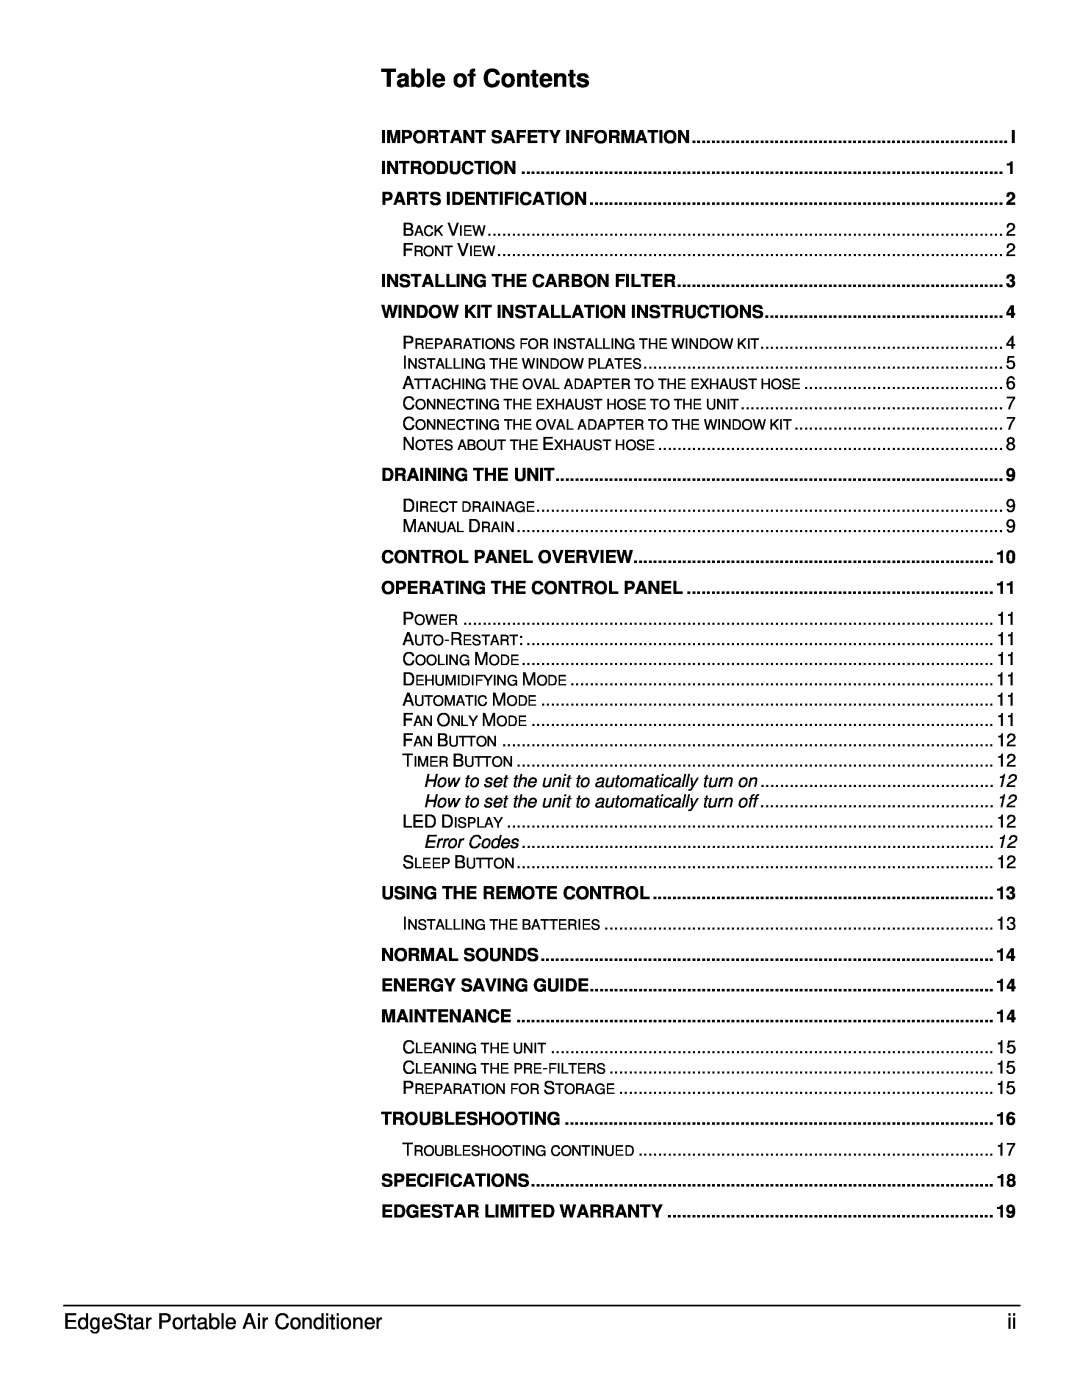 EdgeStar AP10001B owner manual Table of Contents, EdgeStar Portable Air Conditioner 